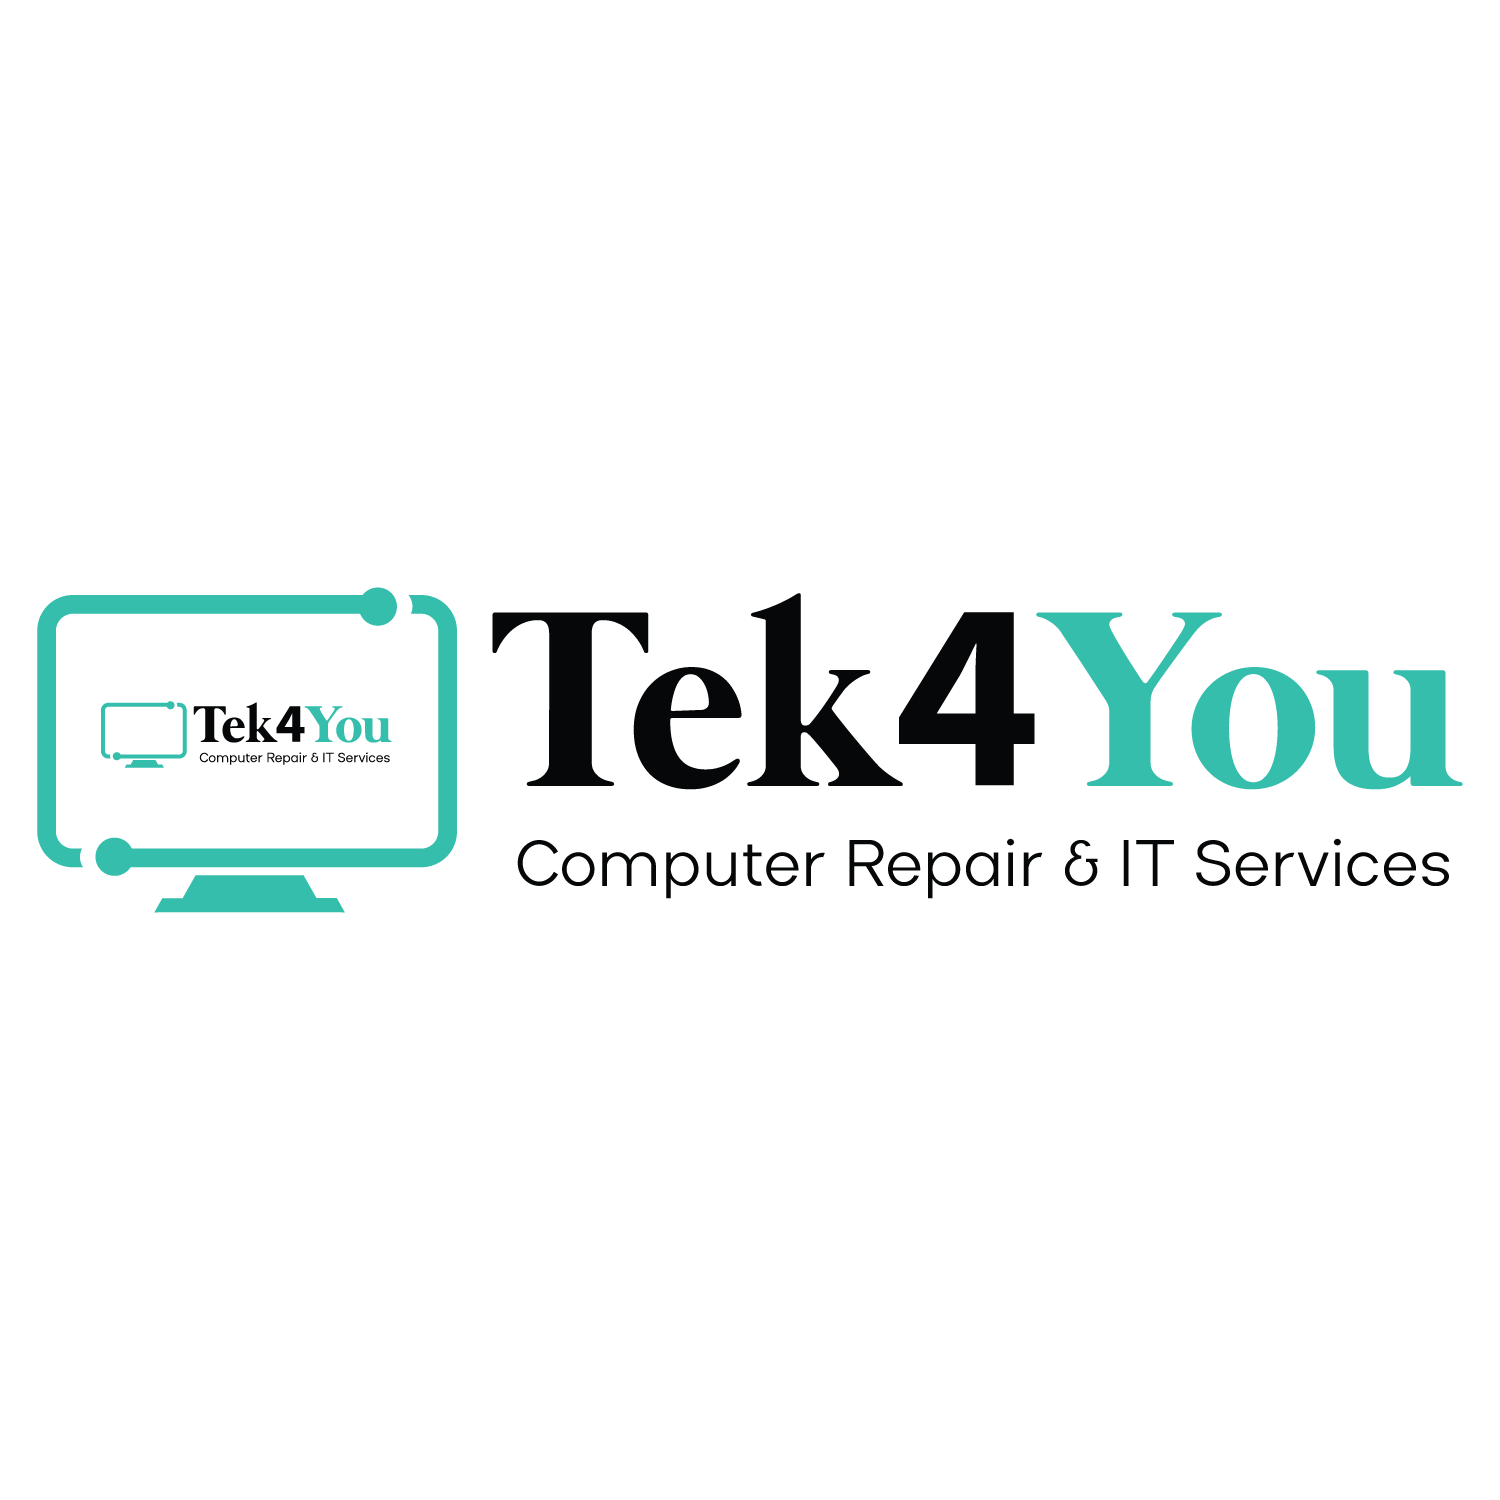 Tek4You Computer Repair & IT Services